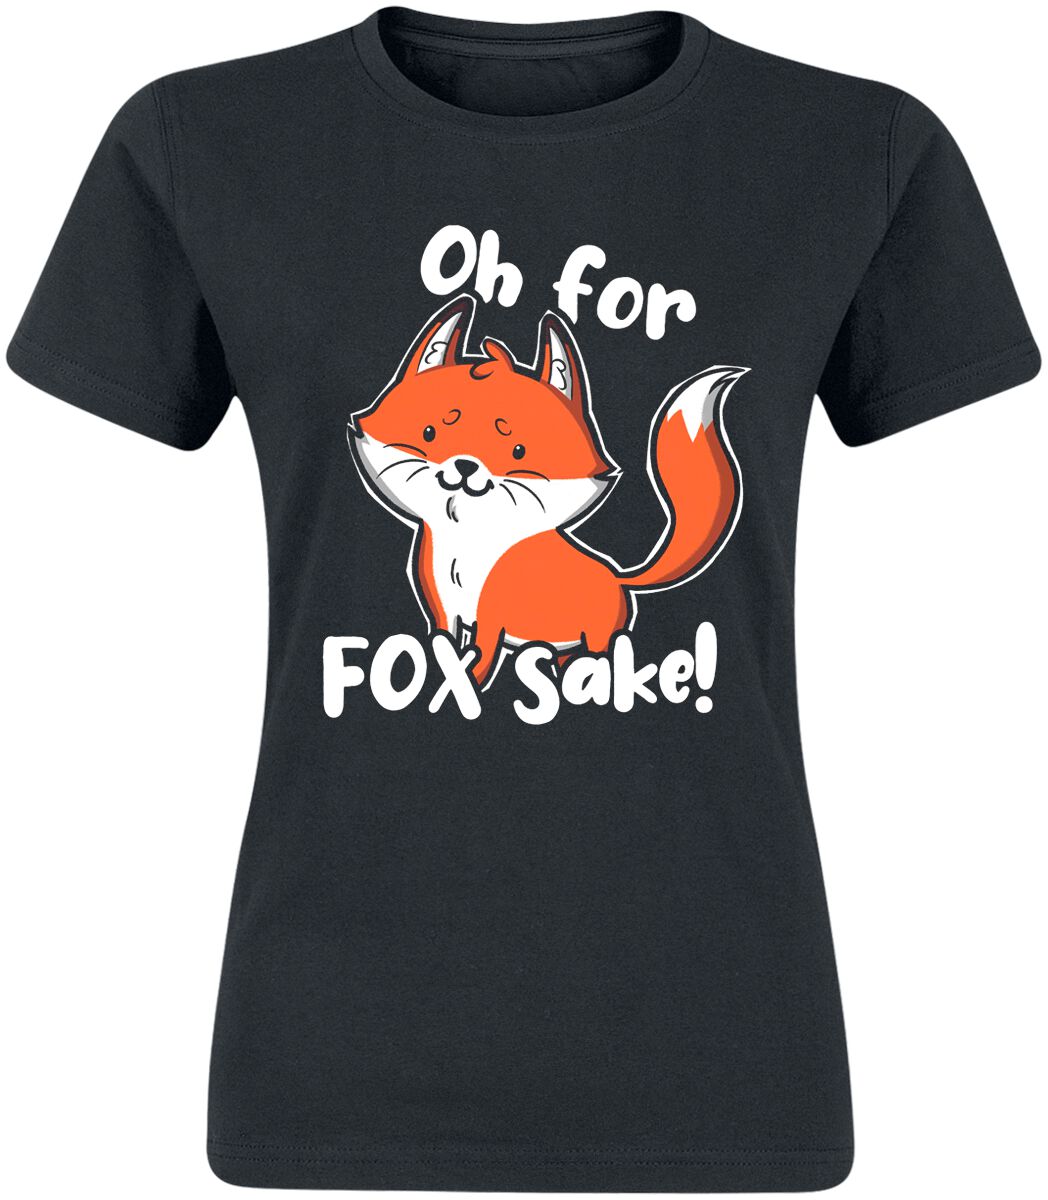 T-Shirt Manches courtes Fun de Tierisch - Fox Sake - S à XXL - pour Femme - noir